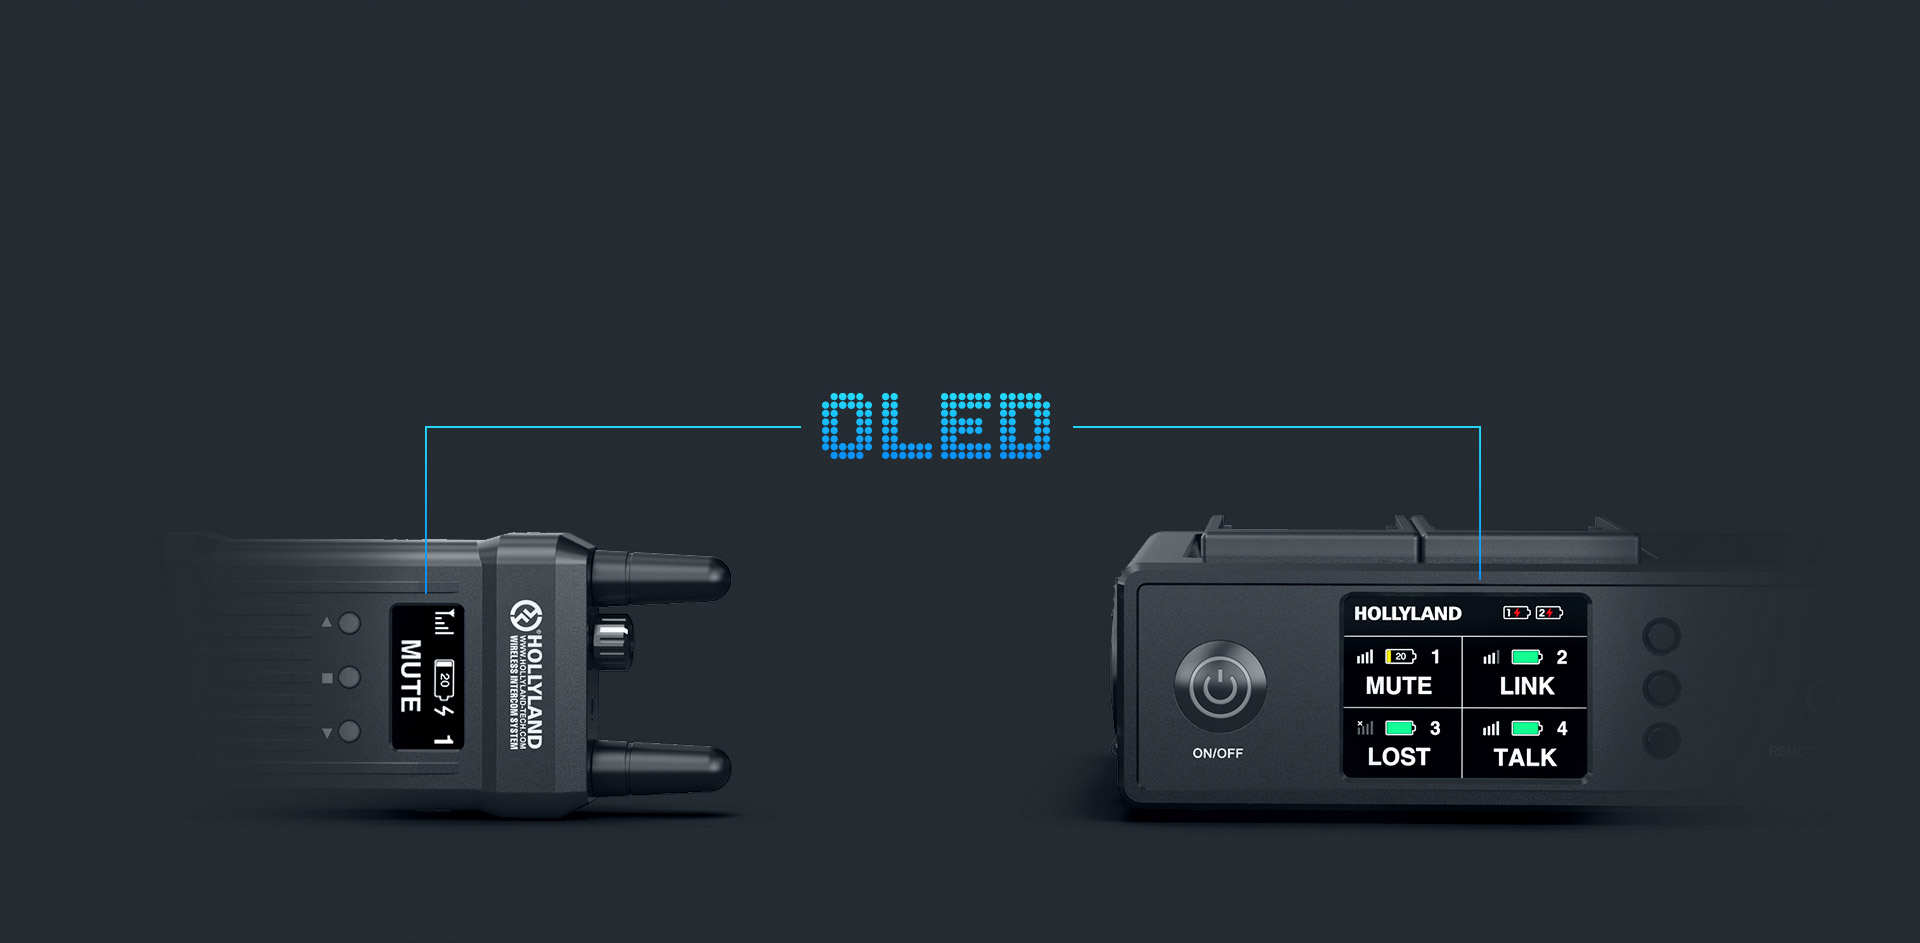 HD OLED beltpack display, wireless intercom beltpacks display, hollyland mars wireless intercom